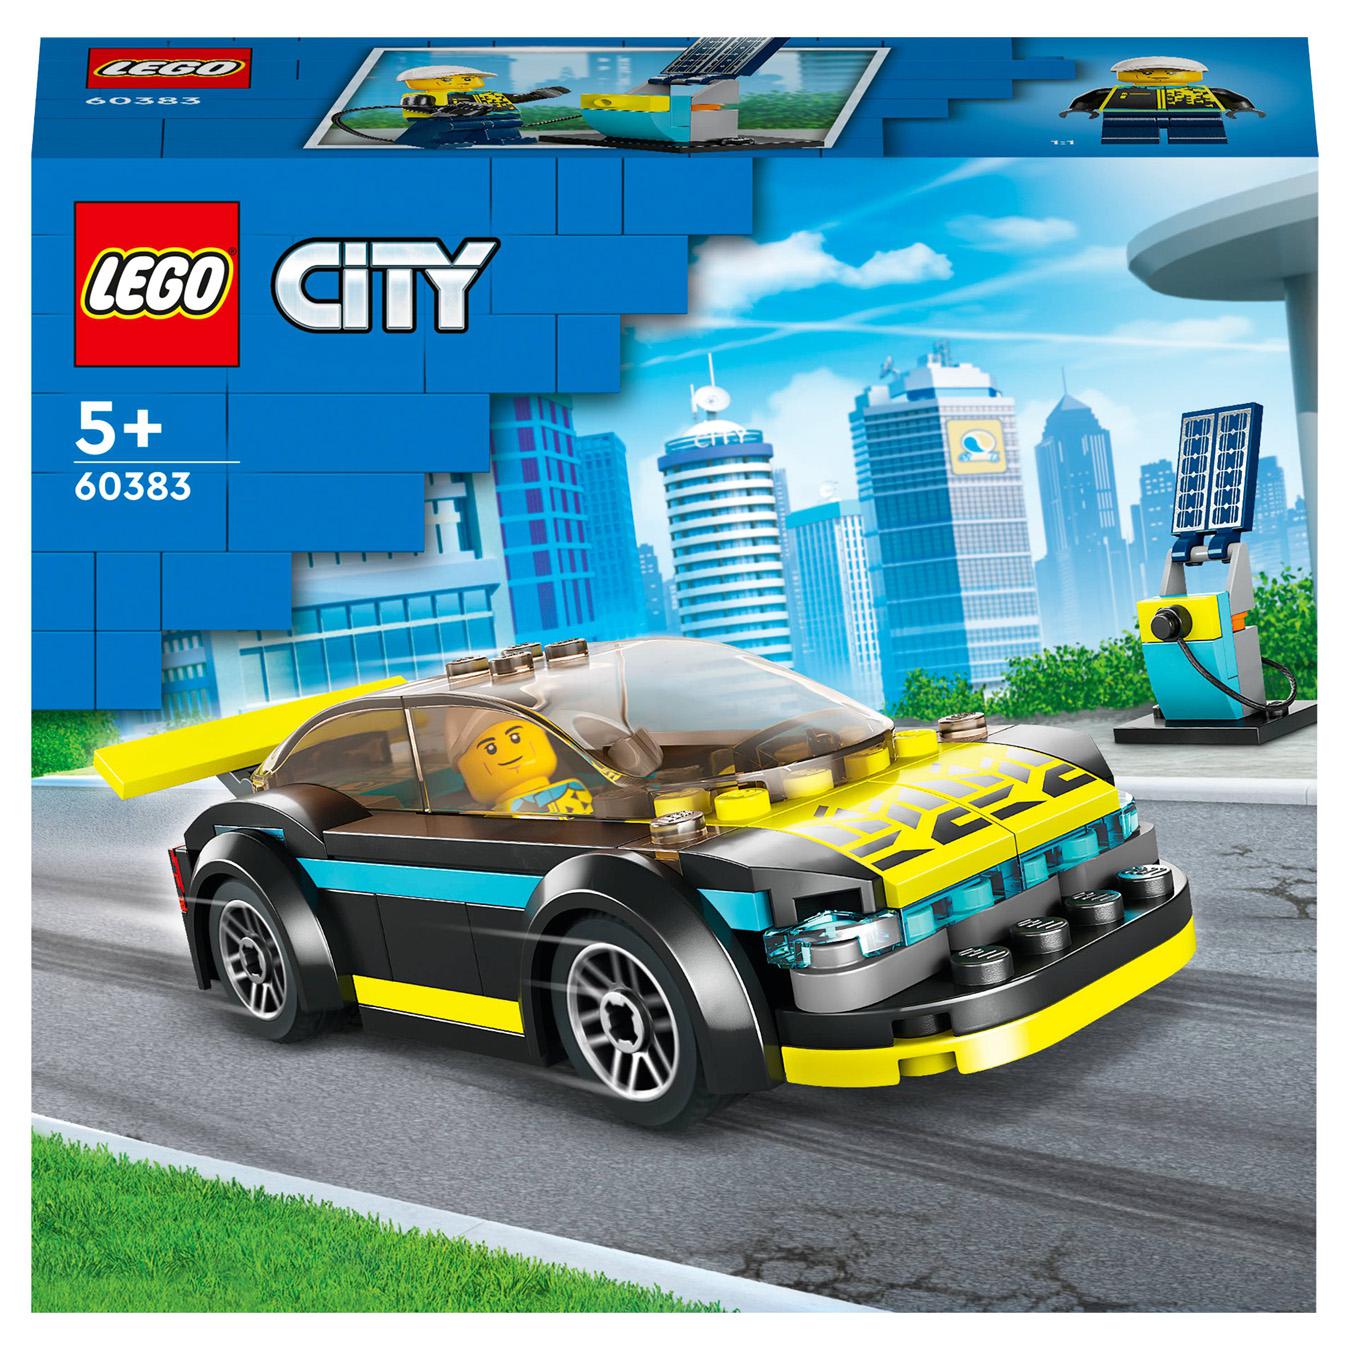 Constructor LEGO City Electric sports car